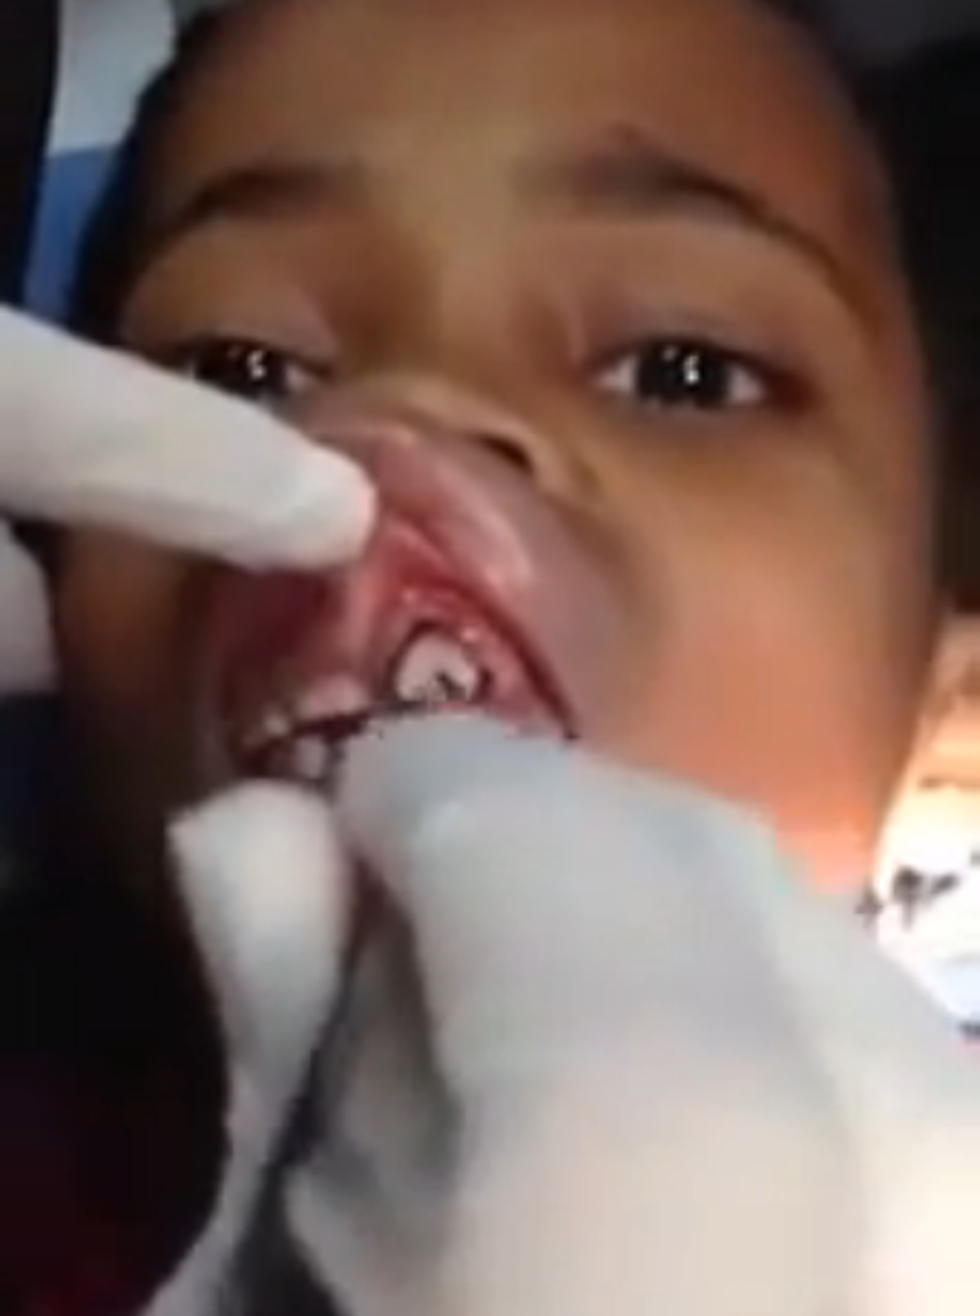 Dentist Removes Maggots from Girl’s Gums